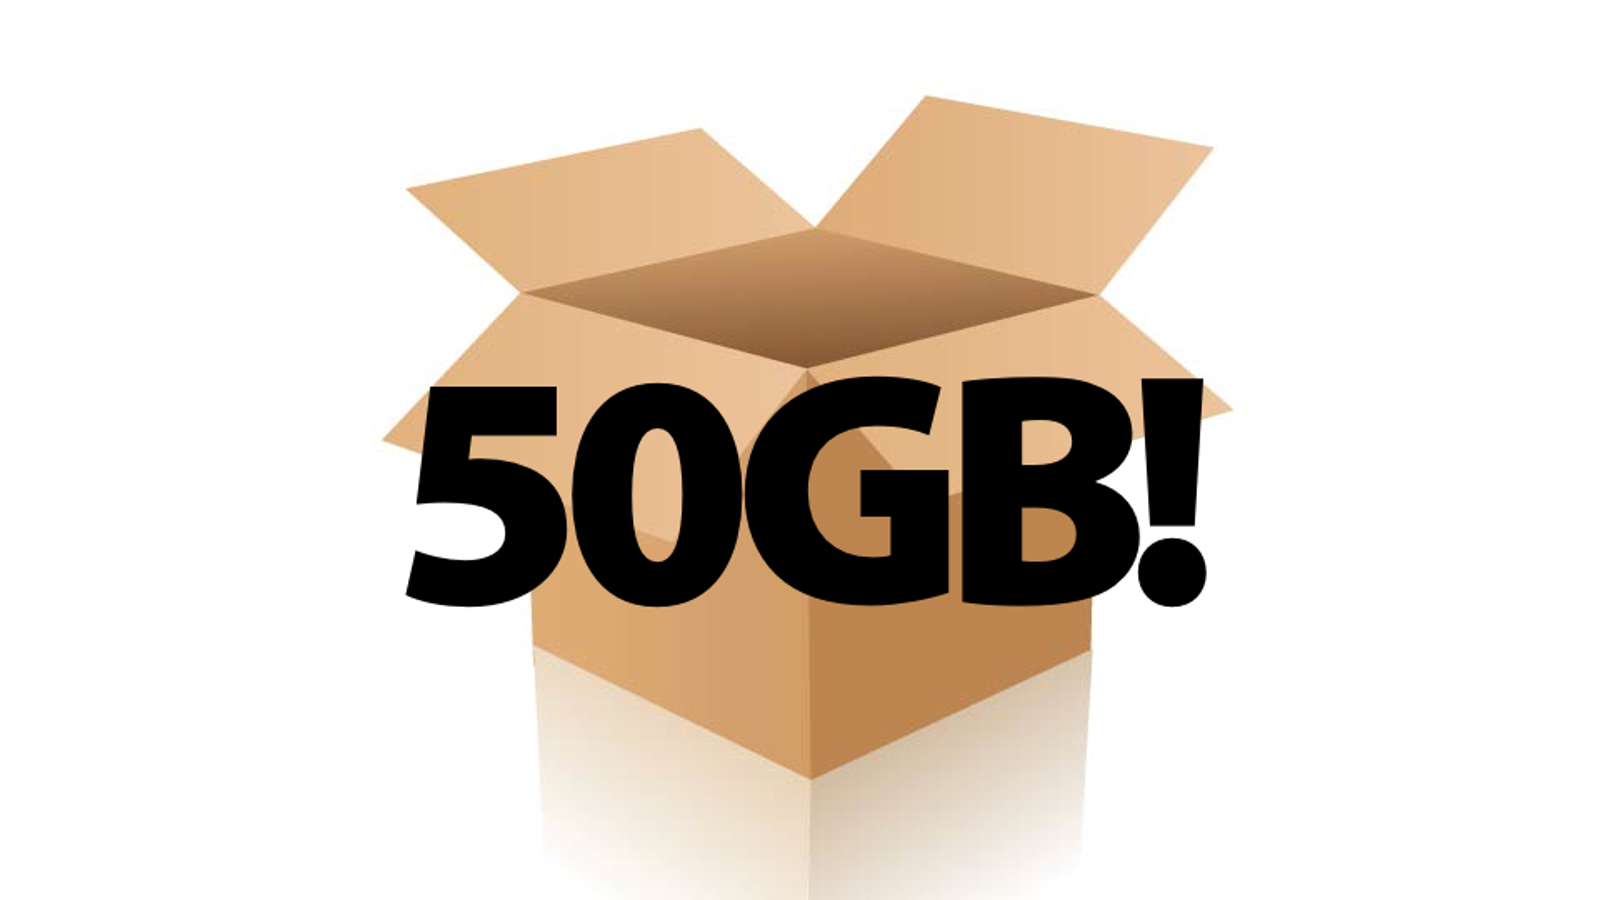 30 gb cloud storage free